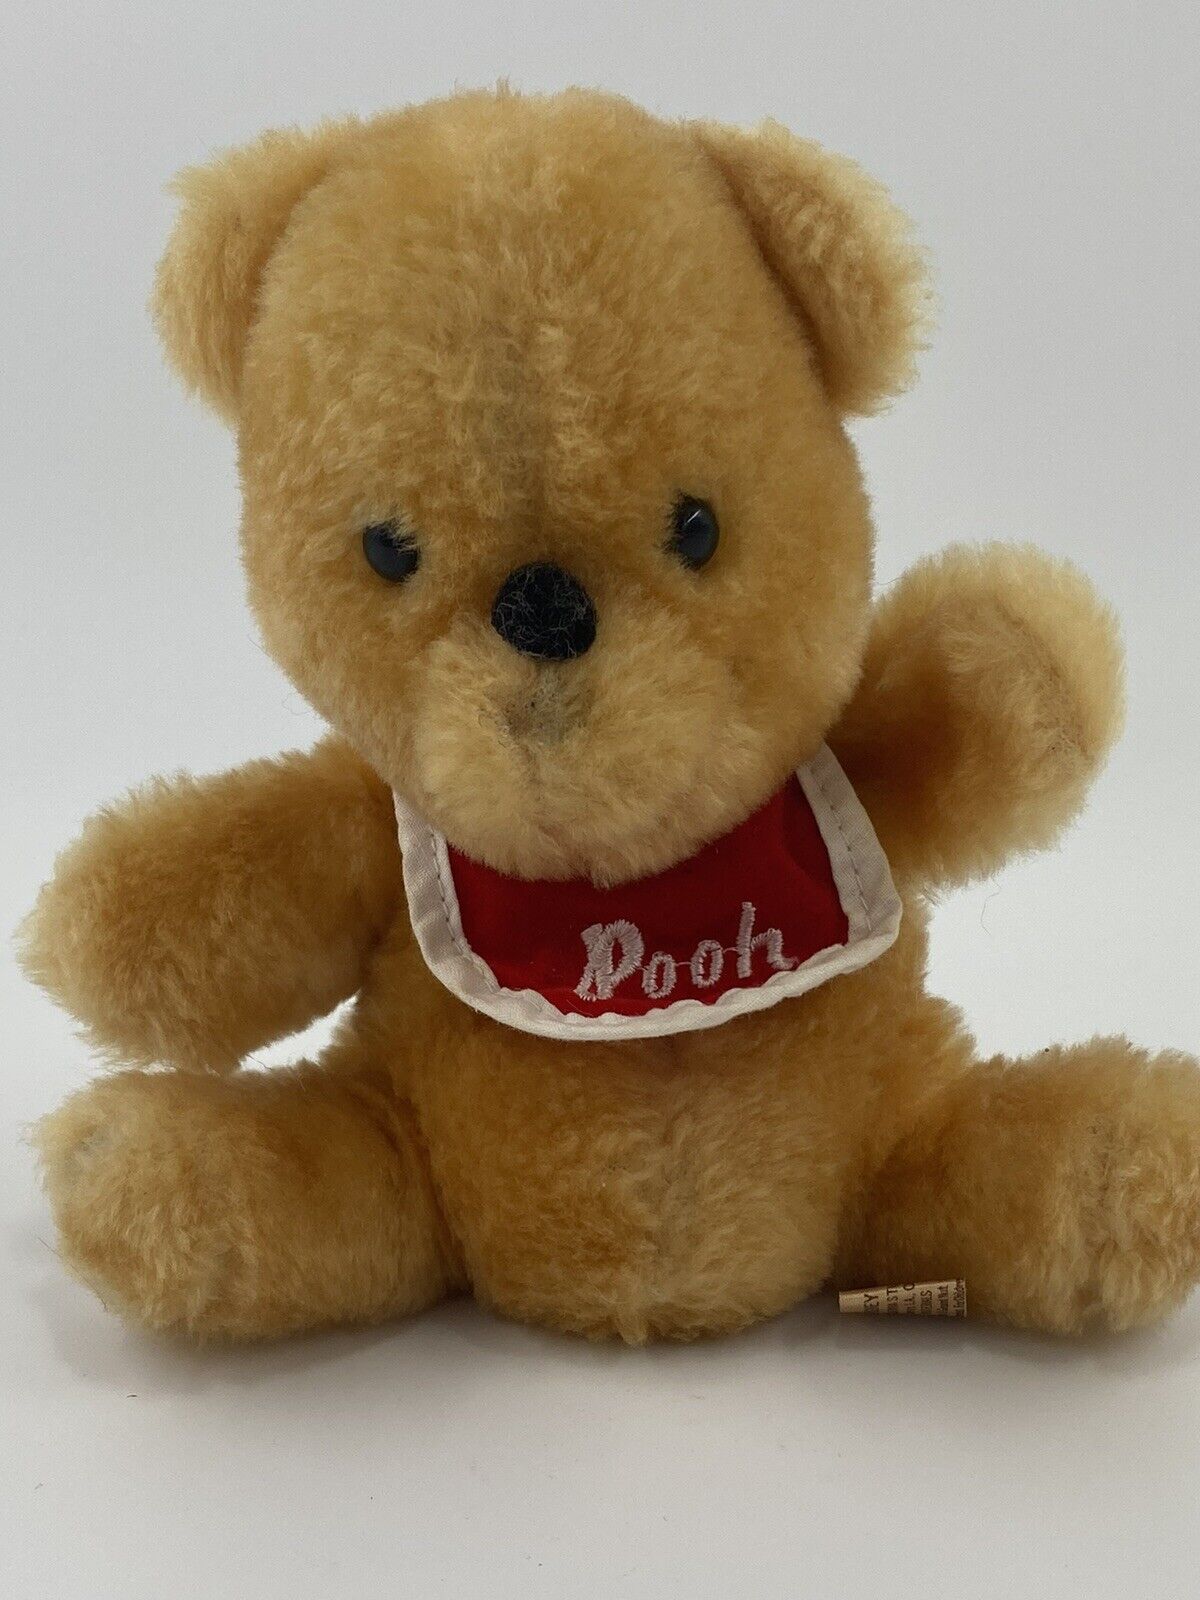 VINTAGE Walt Disney Productions Winnie The Pooh Stuffed Animal Plush W/ Bib 6”